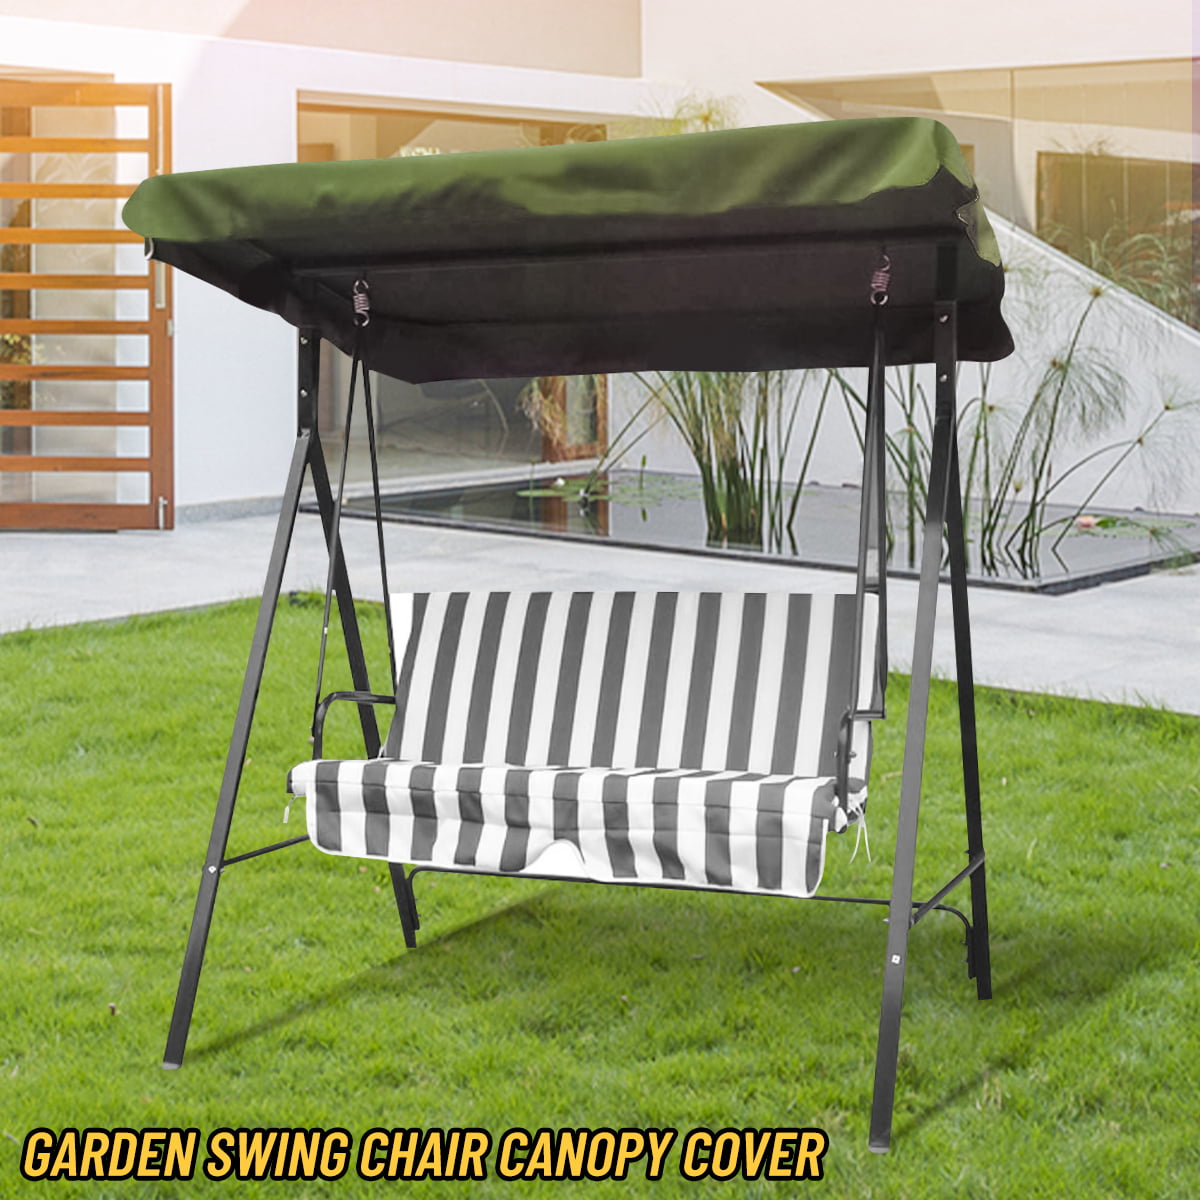 1x Swing Chair Top Cover Hammock seat cover Garden Outdoor O1P8 